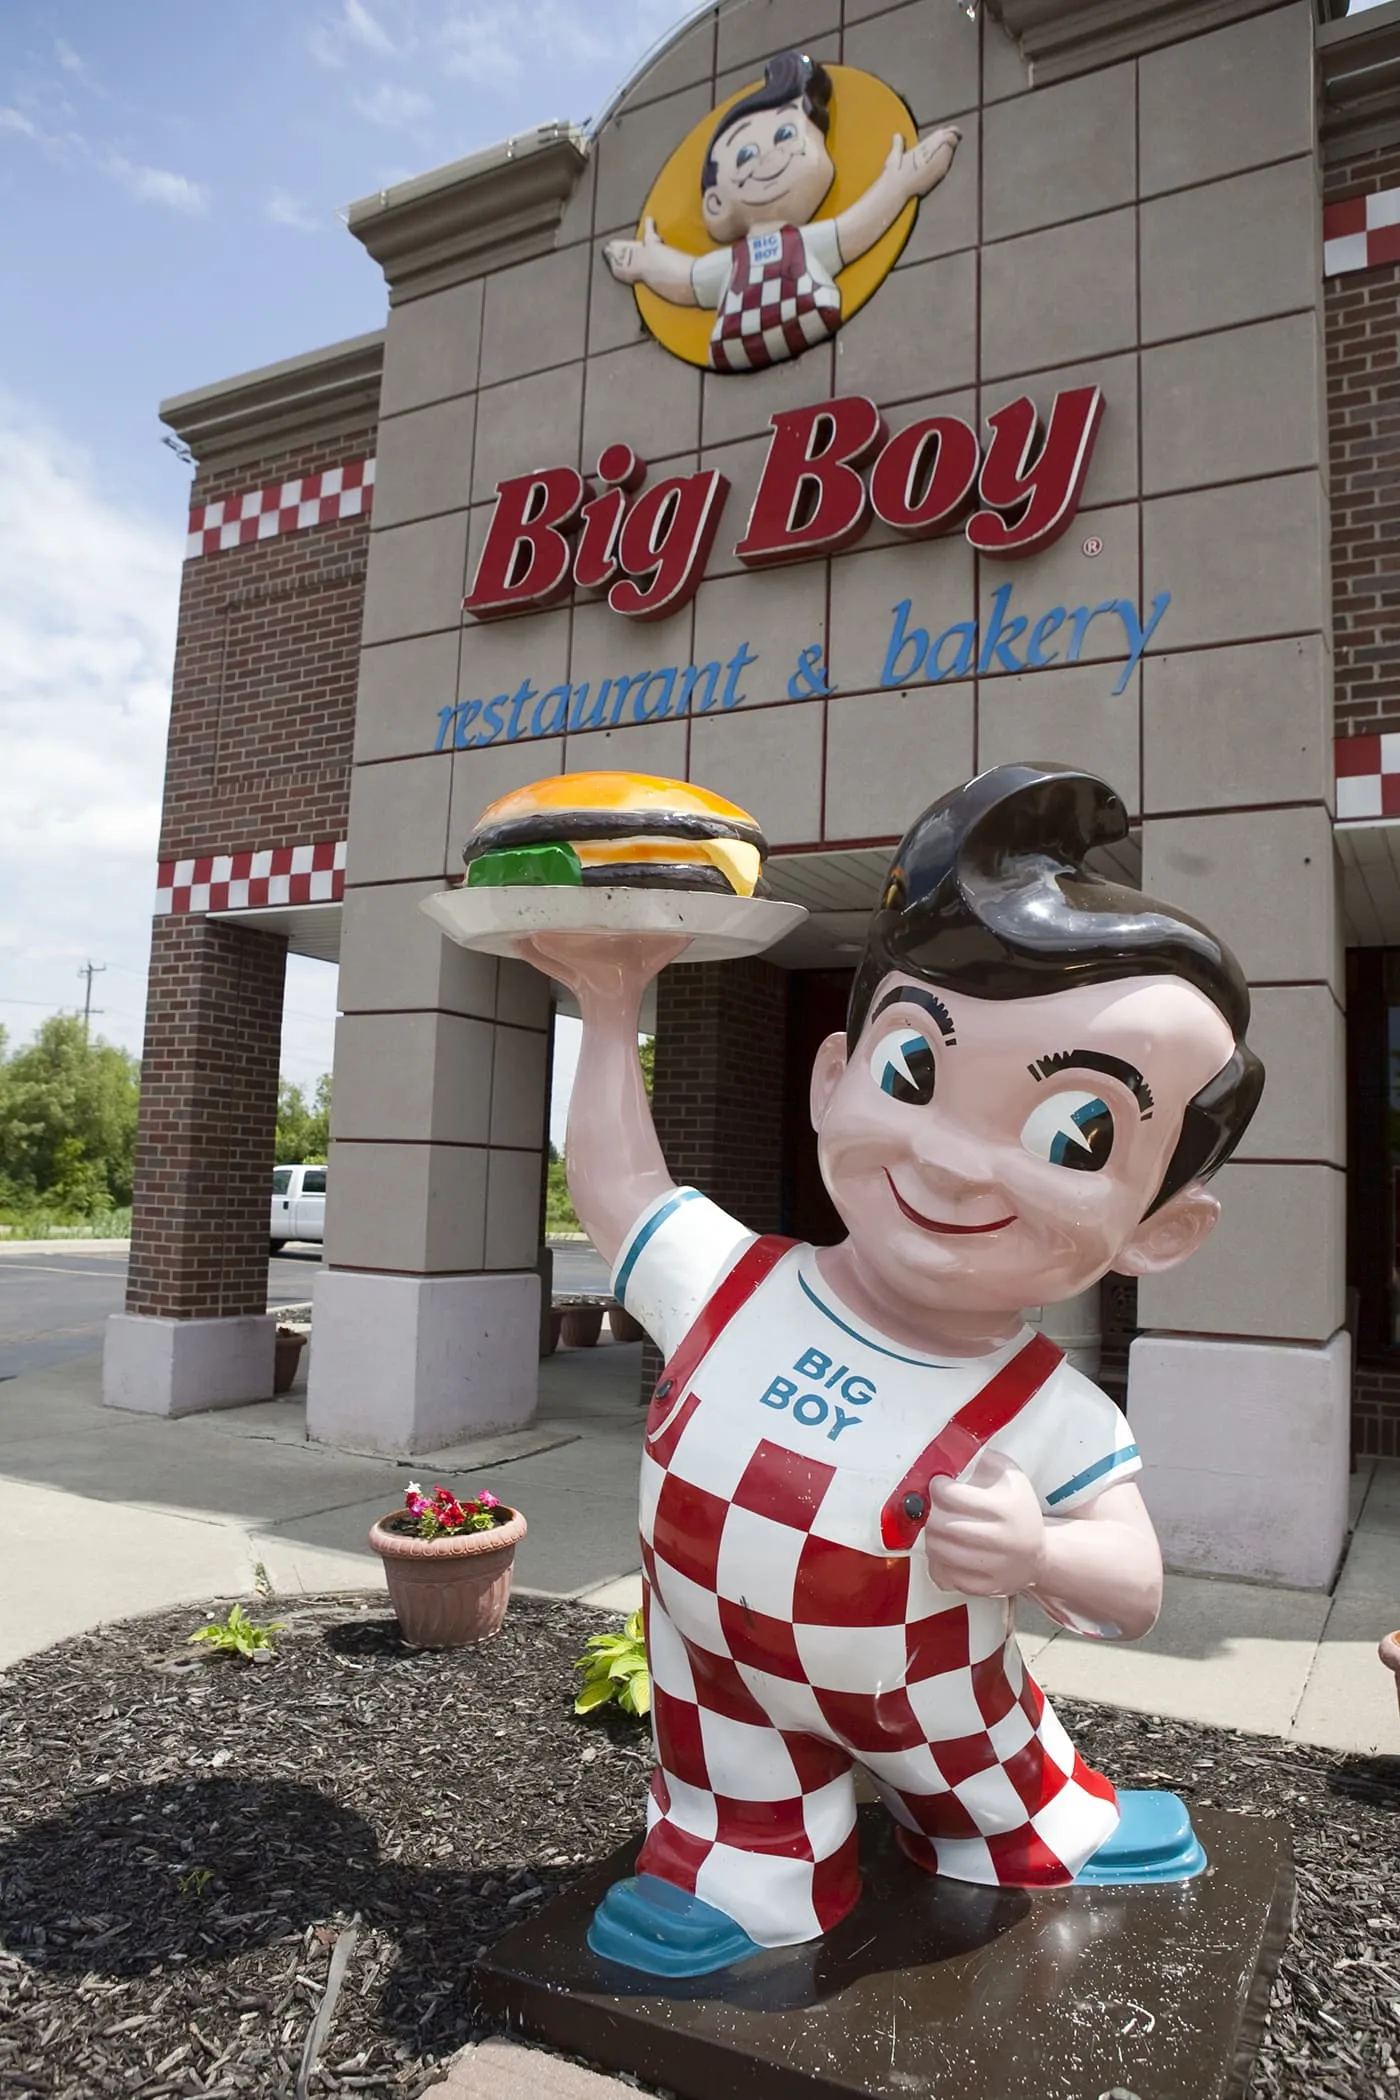 Big Boy Statue - I-94 Exit 175 in Michigan